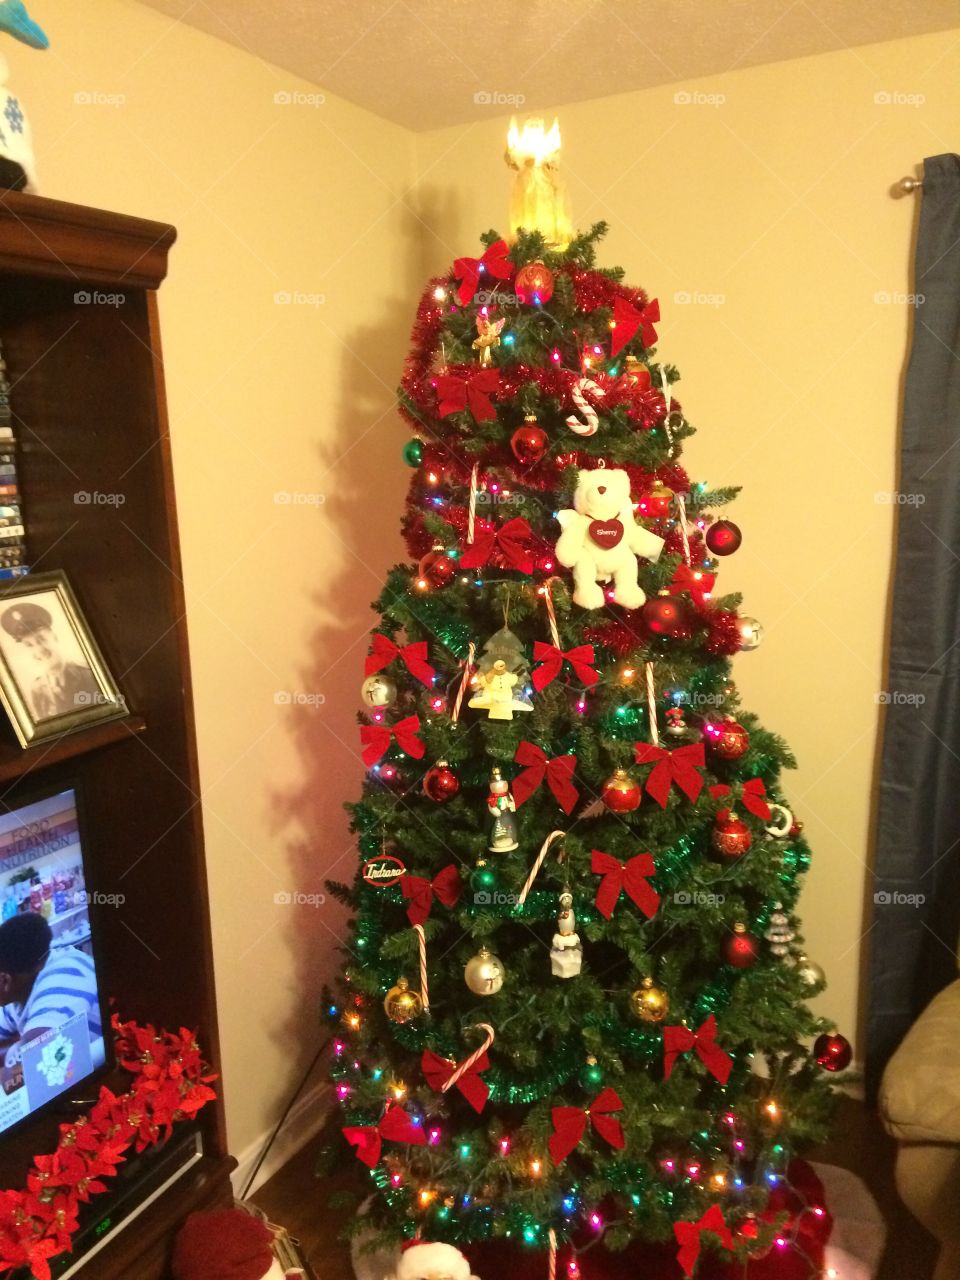 Oh Christmas Tree!